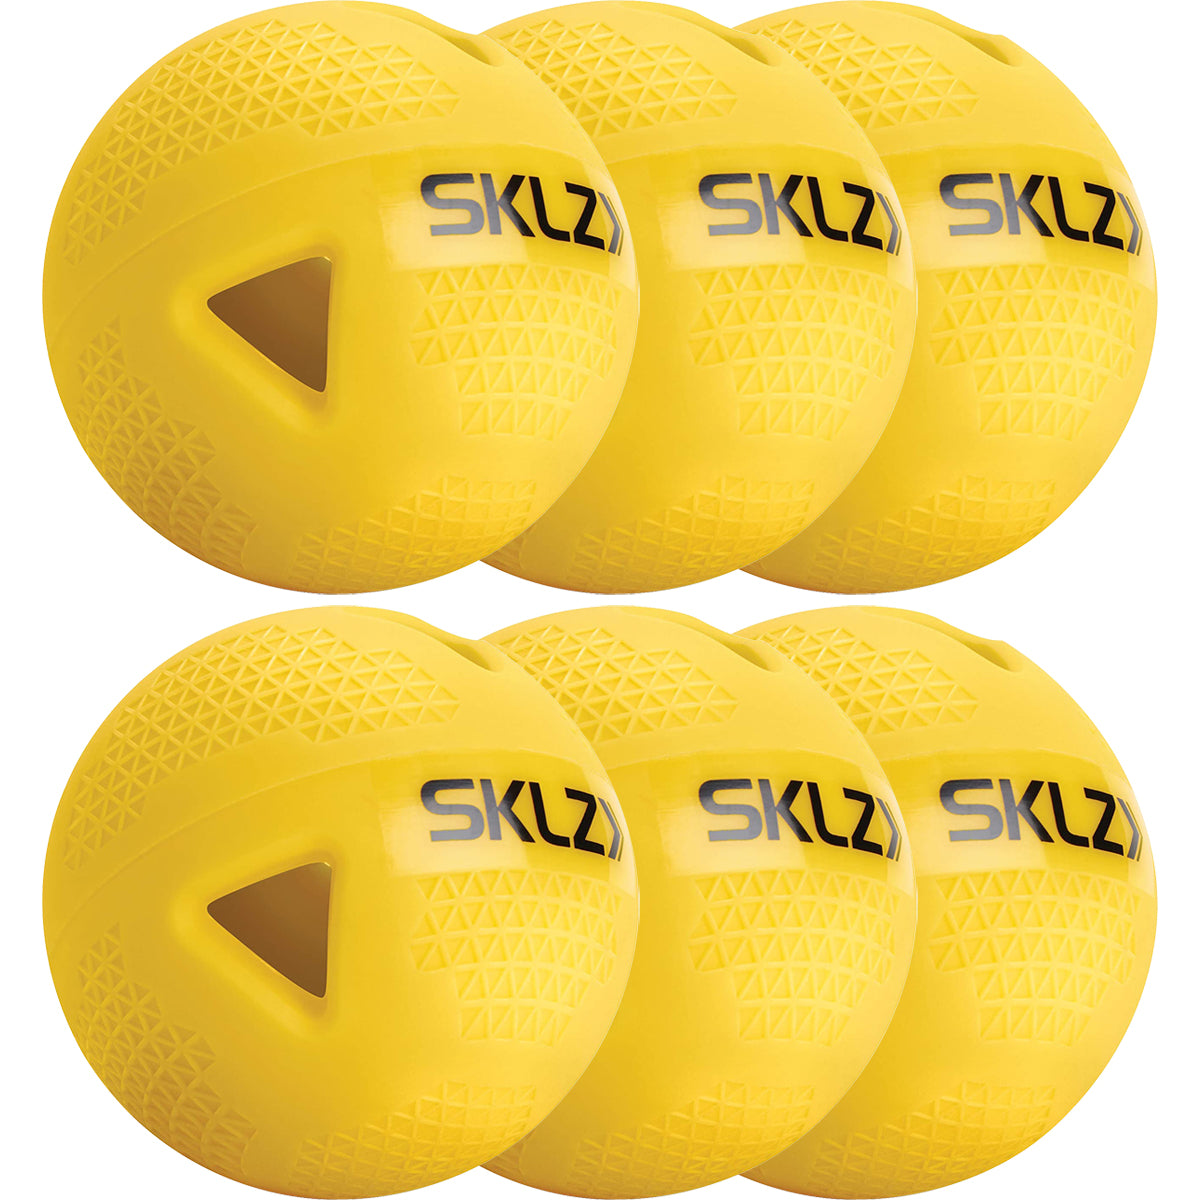 SKLZ Premium Impact Practice Baseballs 6-Pack - Yellow SKLZ